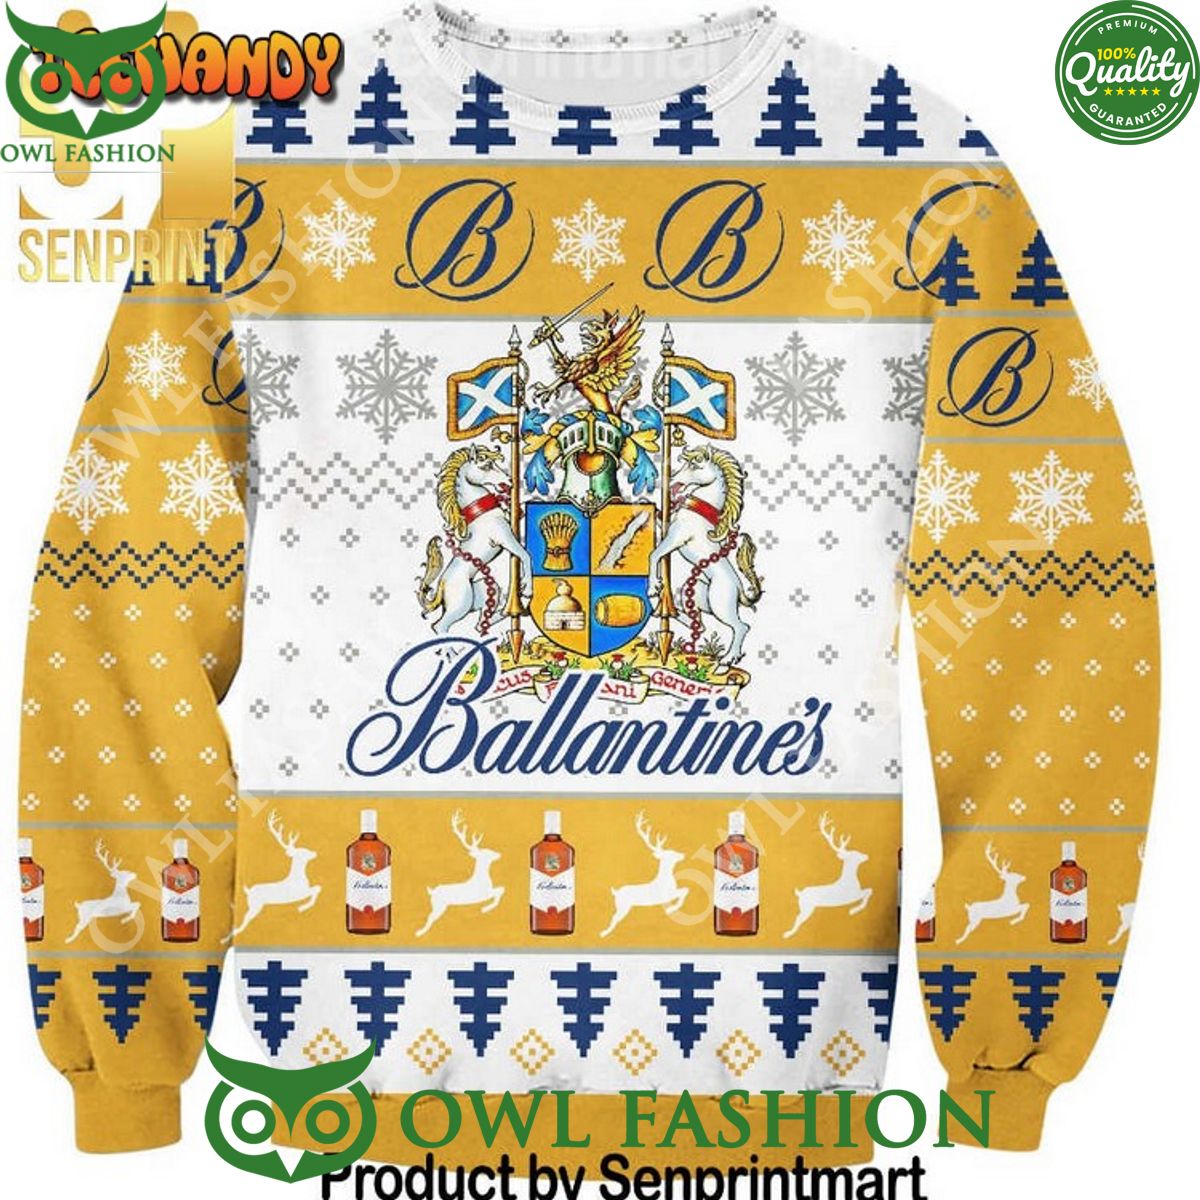 ballantines gift ideas pattern ugly wool sweater 1 e8Vk4.jpg